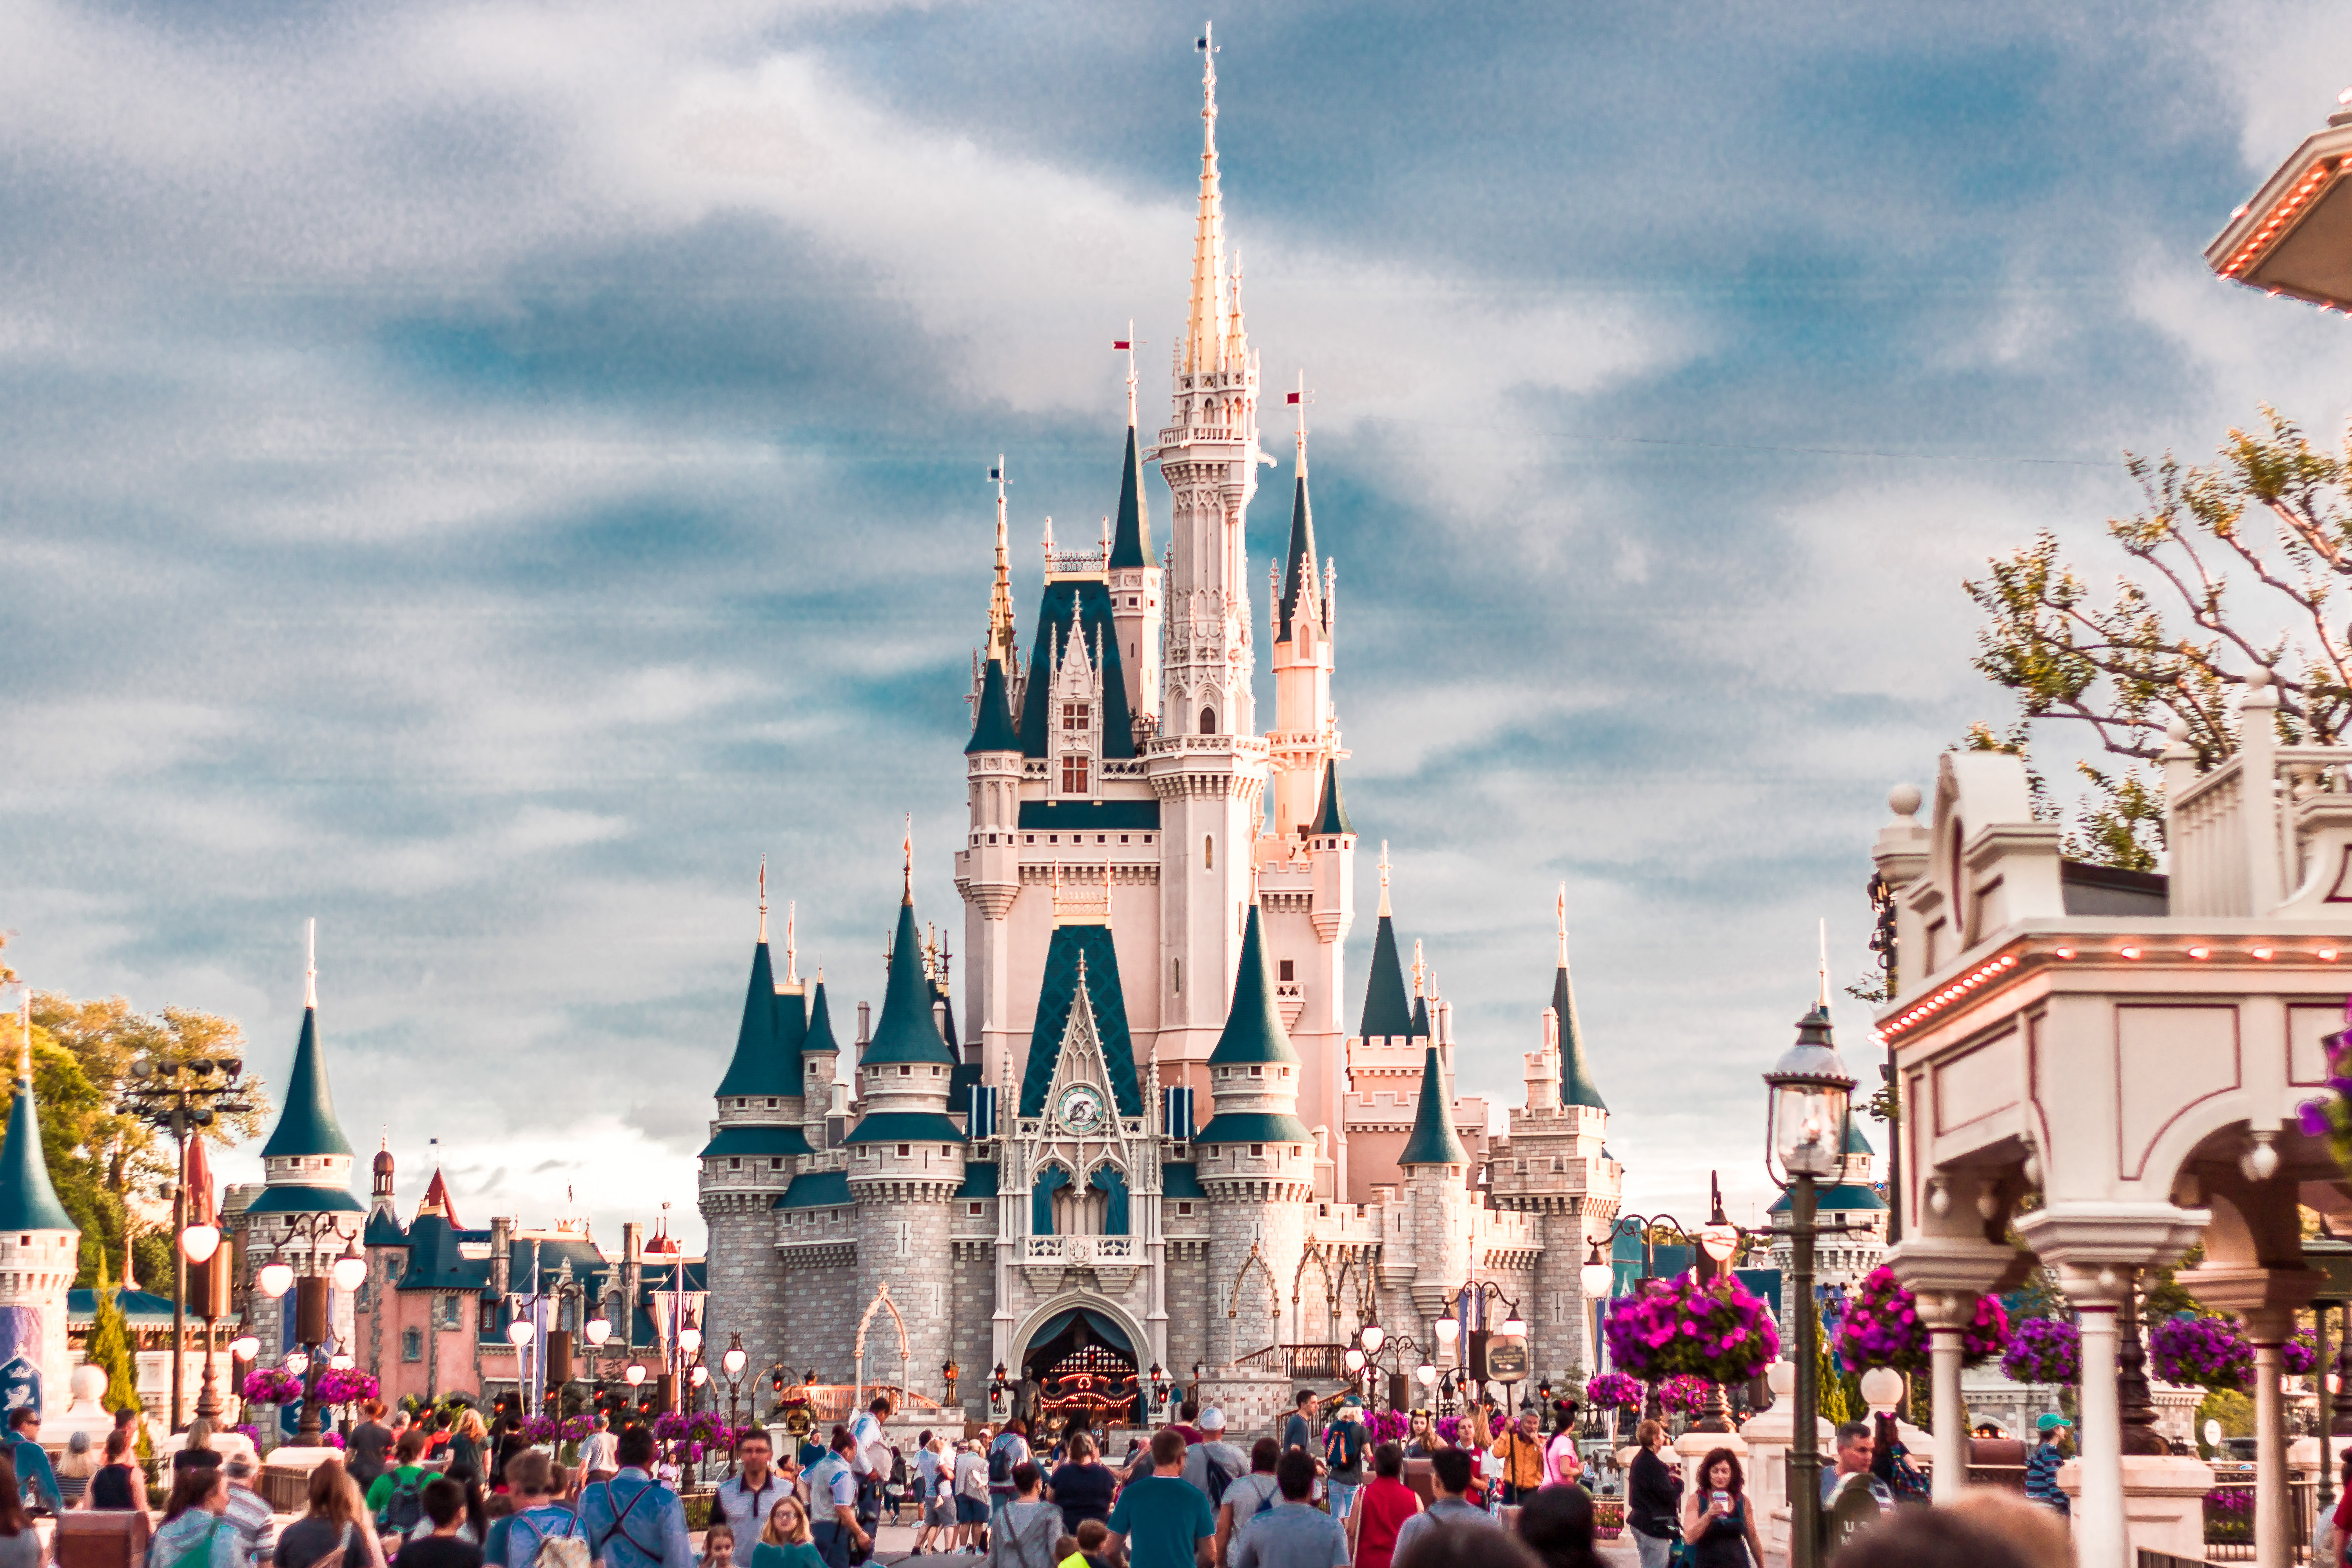 Cinderella Castle at Walt Disney World in Orlando, Florida